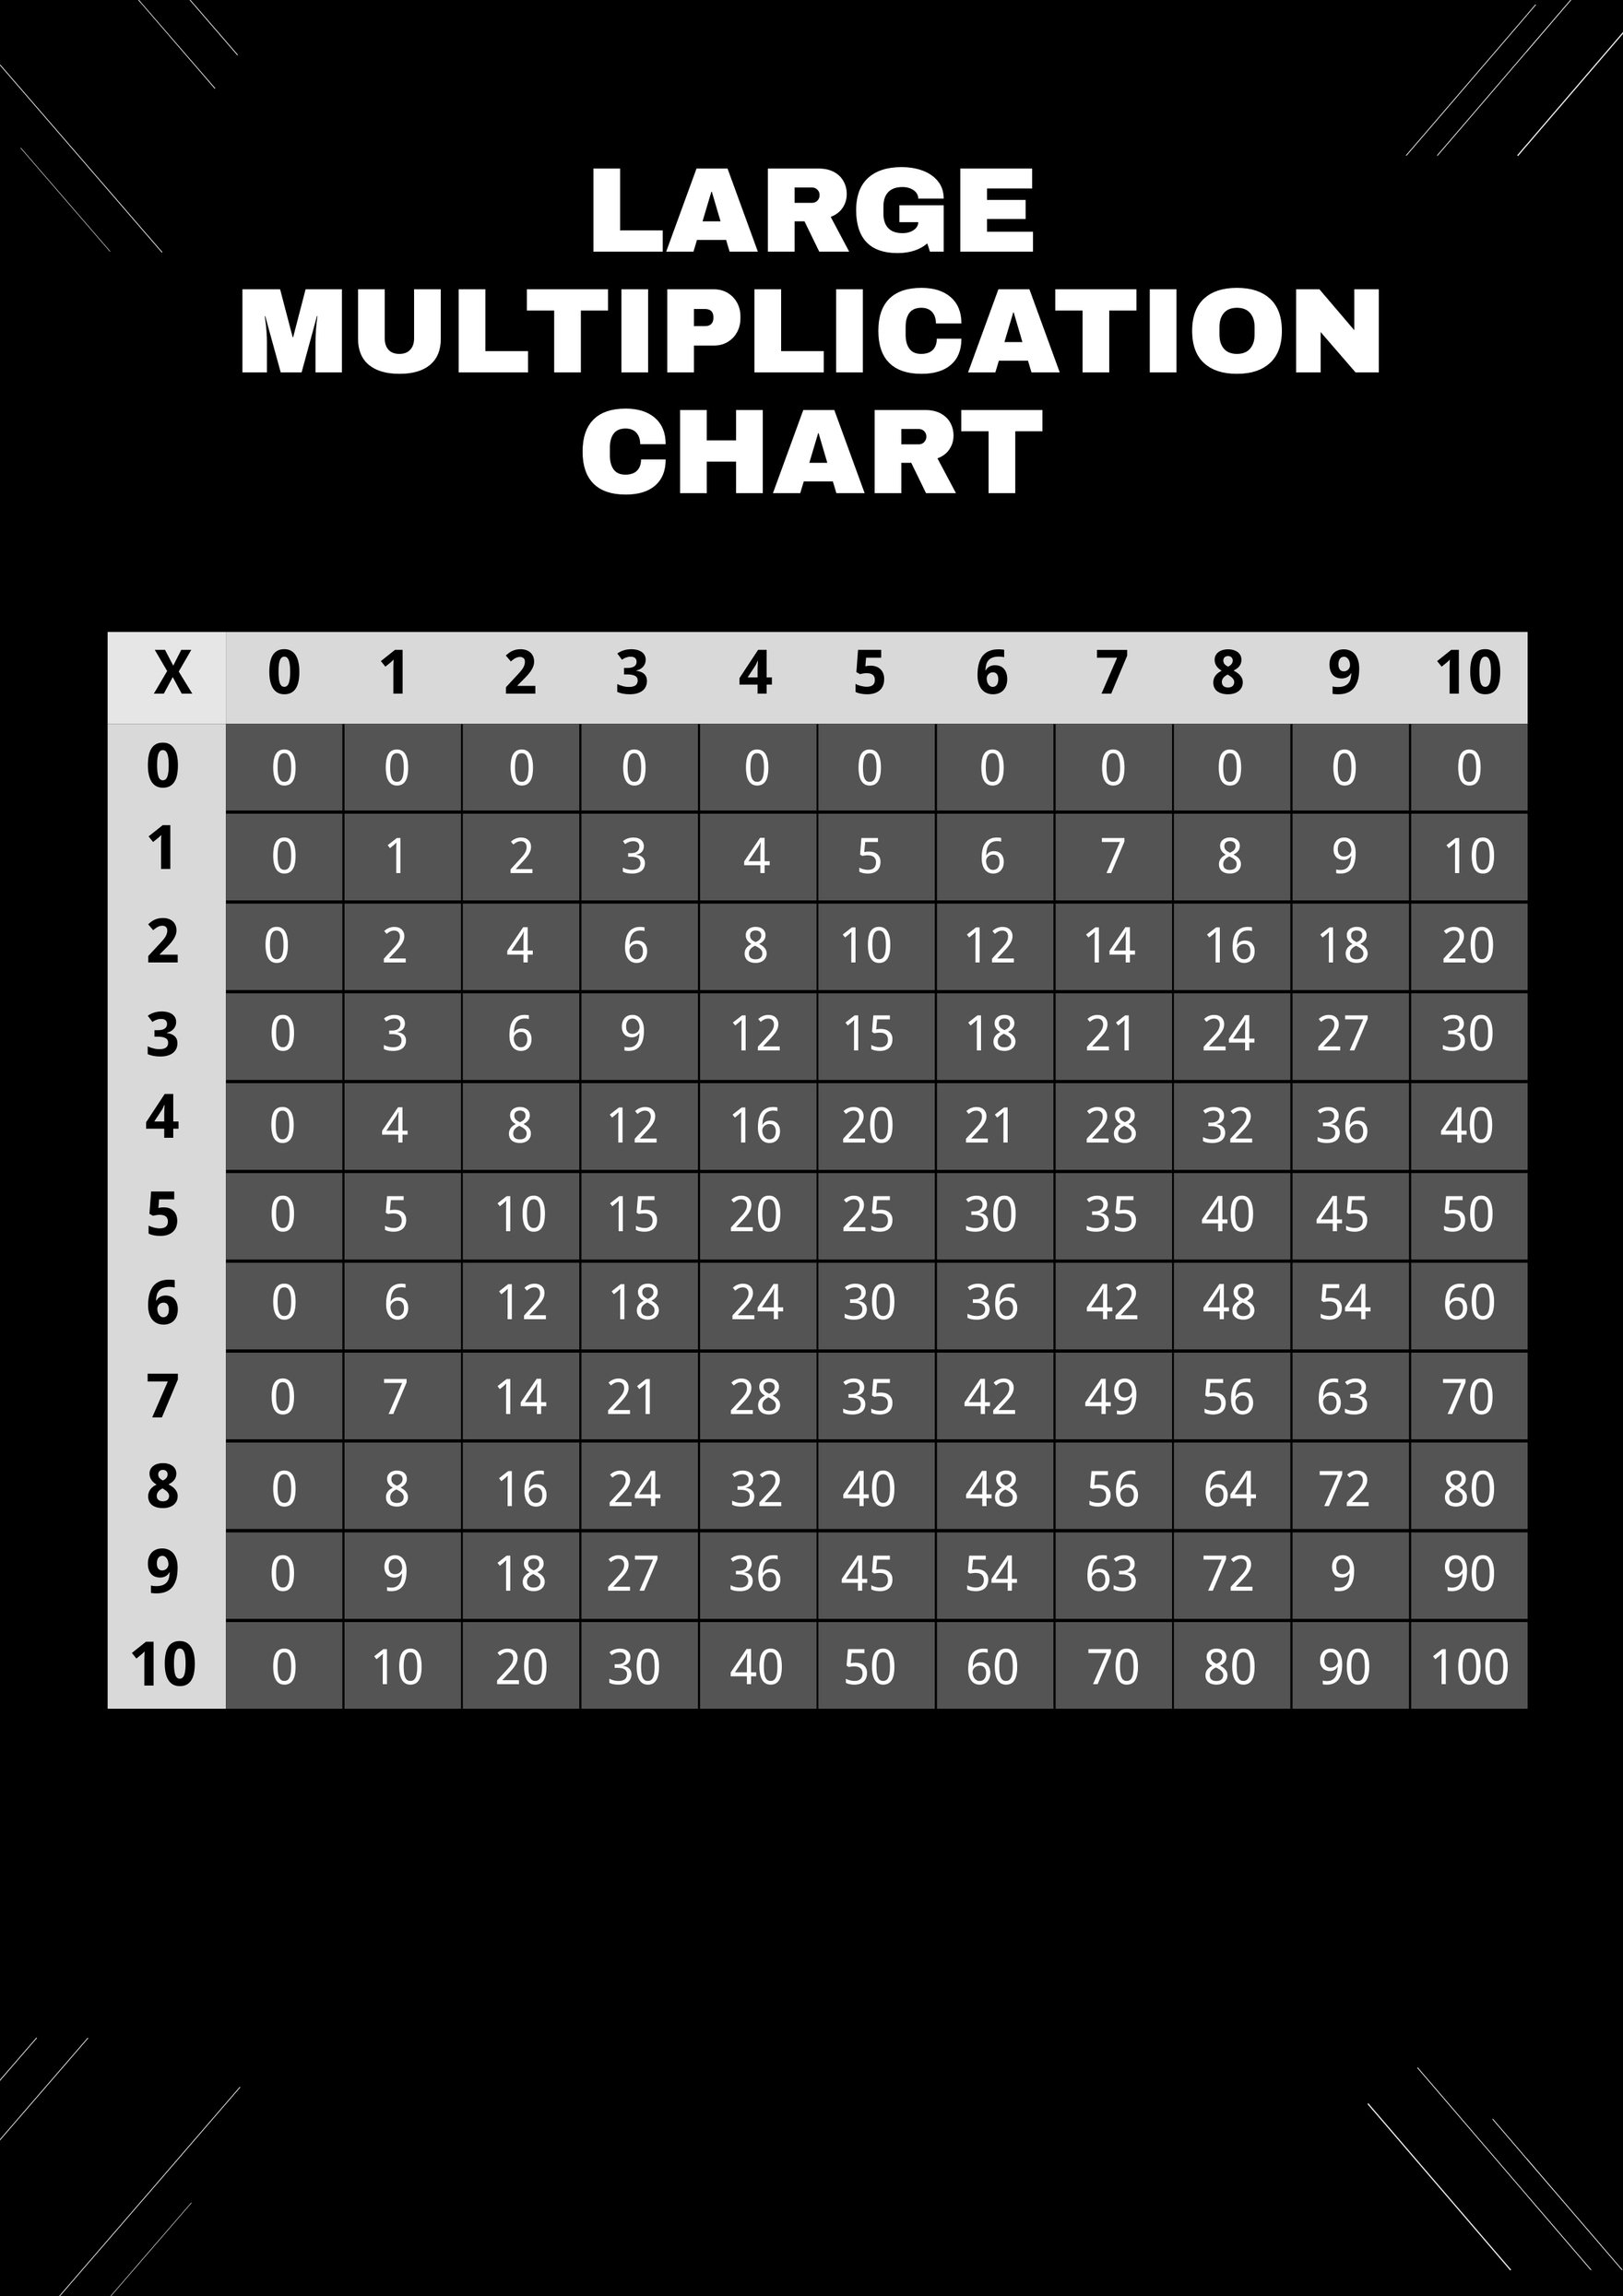 Large Multiplication Chart Template in PDF, Illustrator